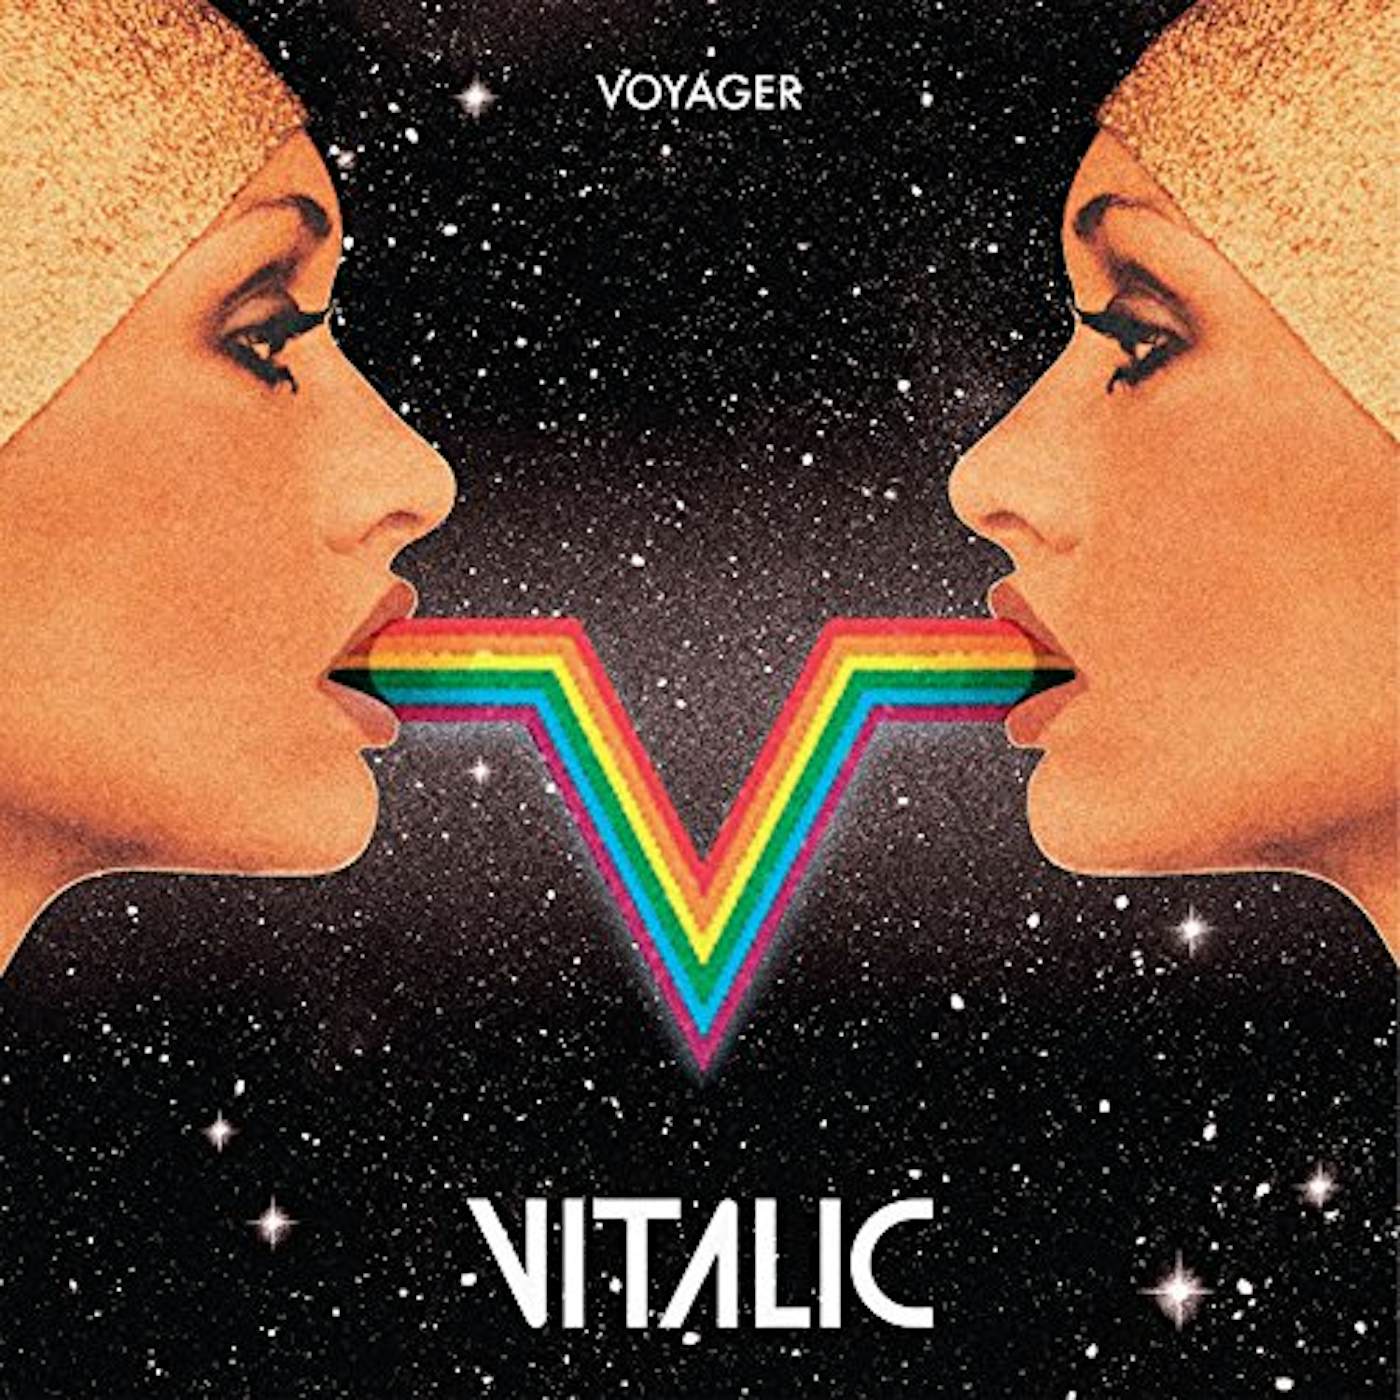 Vitalic VOYAGER CD